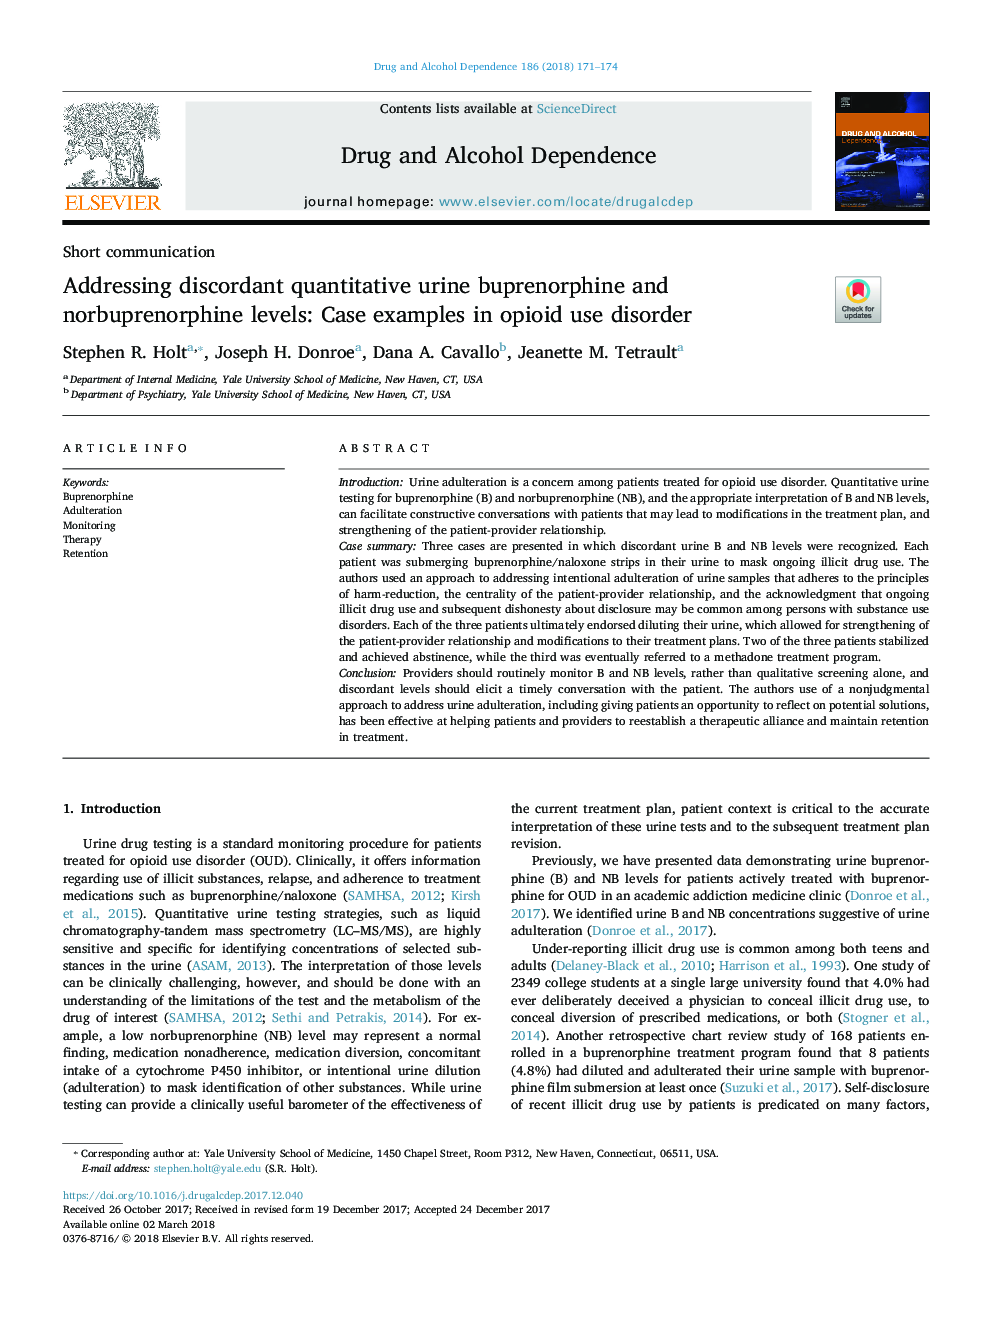 Addressing discordant quantitative urine buprenorphine and norbuprenorphine levels: Case examples in opioid use disorder